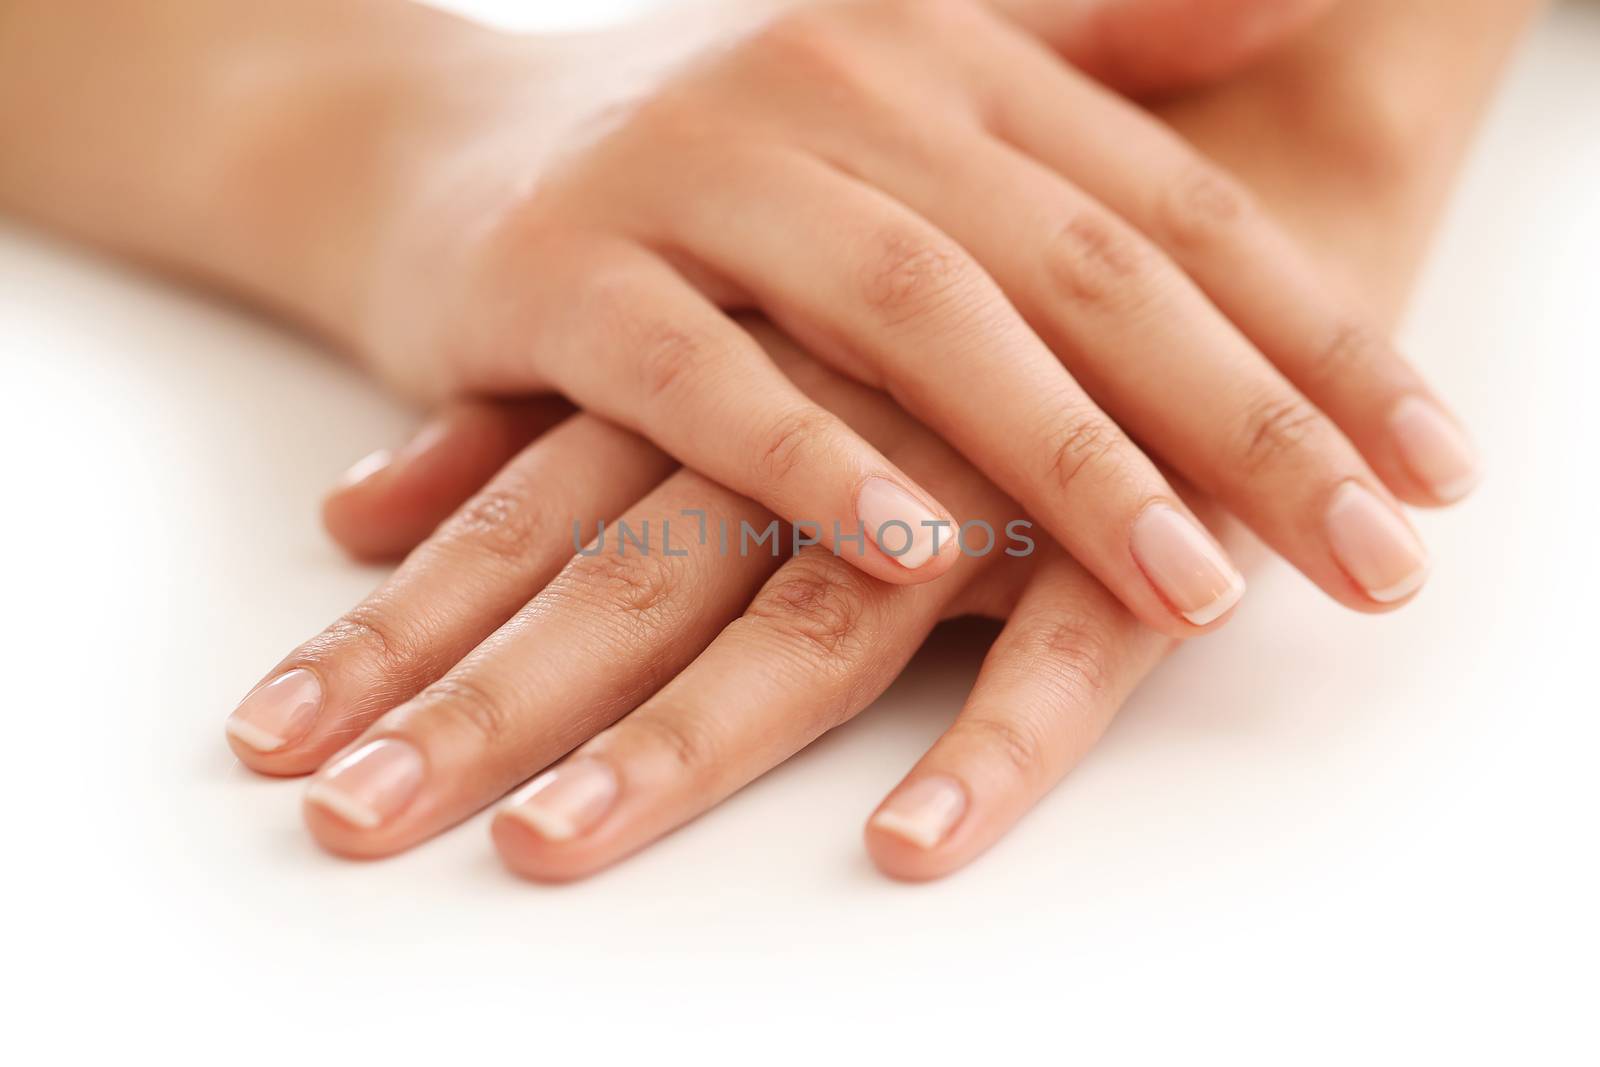 Skin care. Hands in close-up